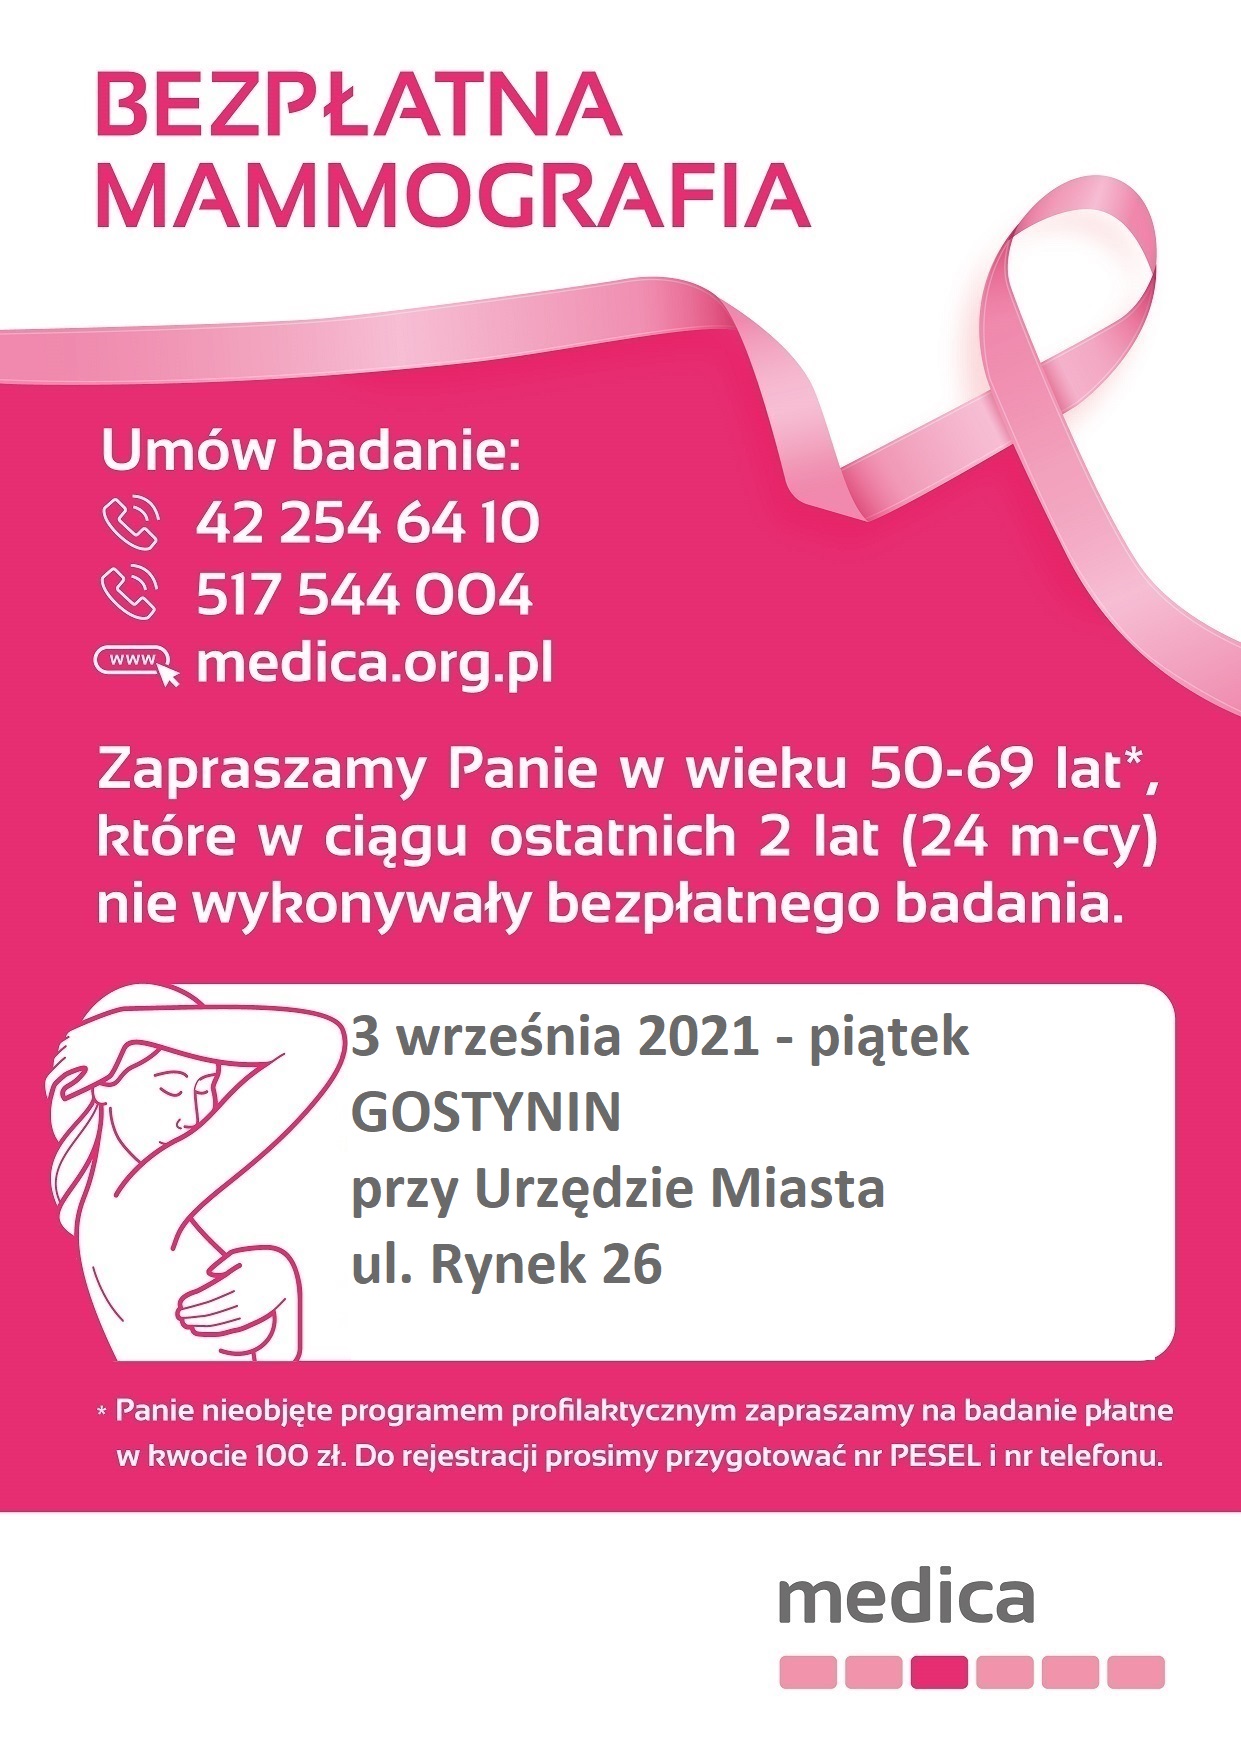 plakat - bezpłatna mammografia